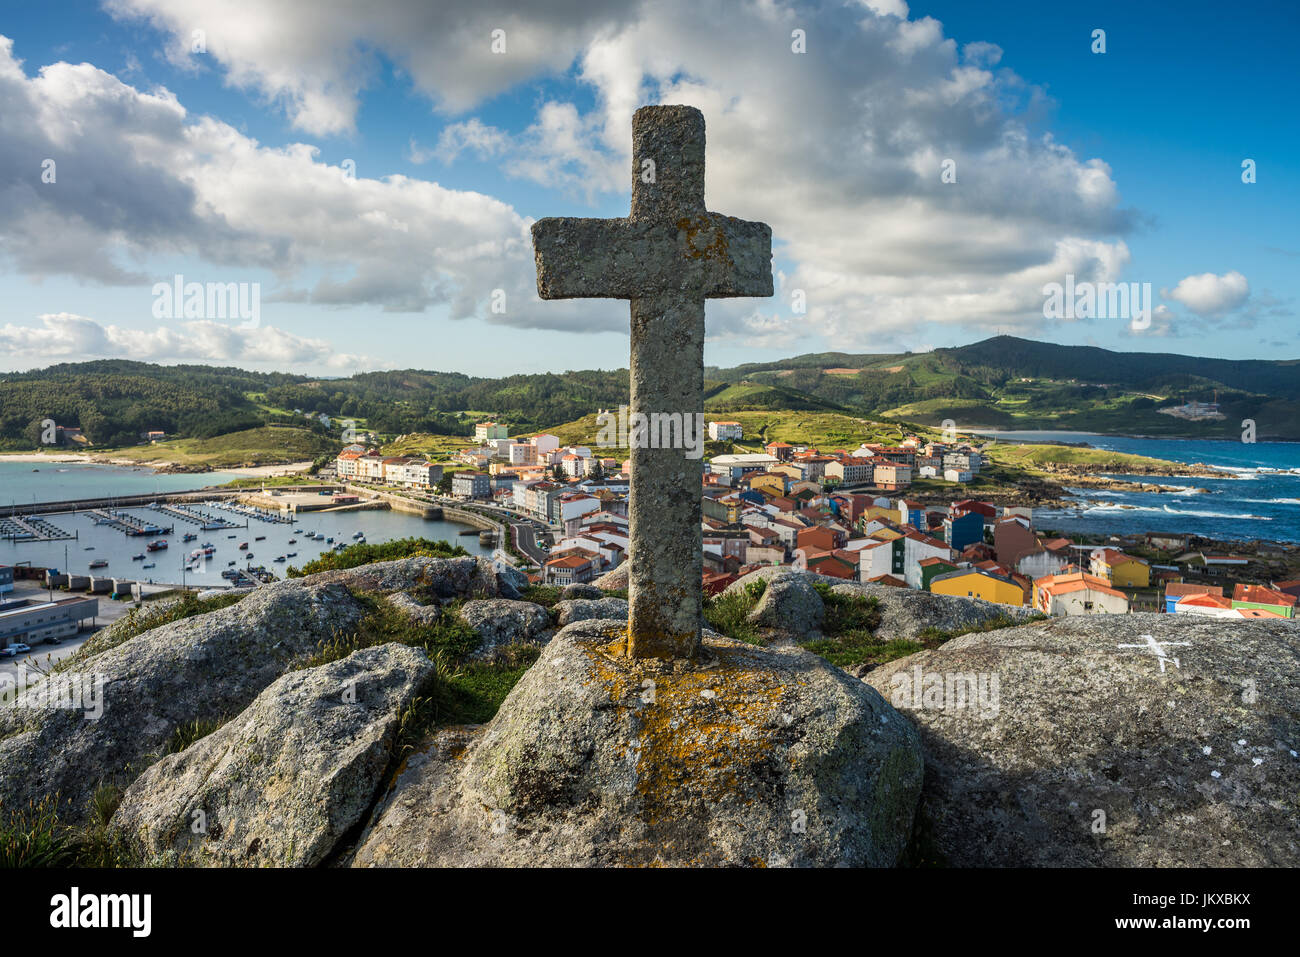 A Muxia, Galizia, Spagna, Europa. Camino de Santiago Foto stock - Alamy